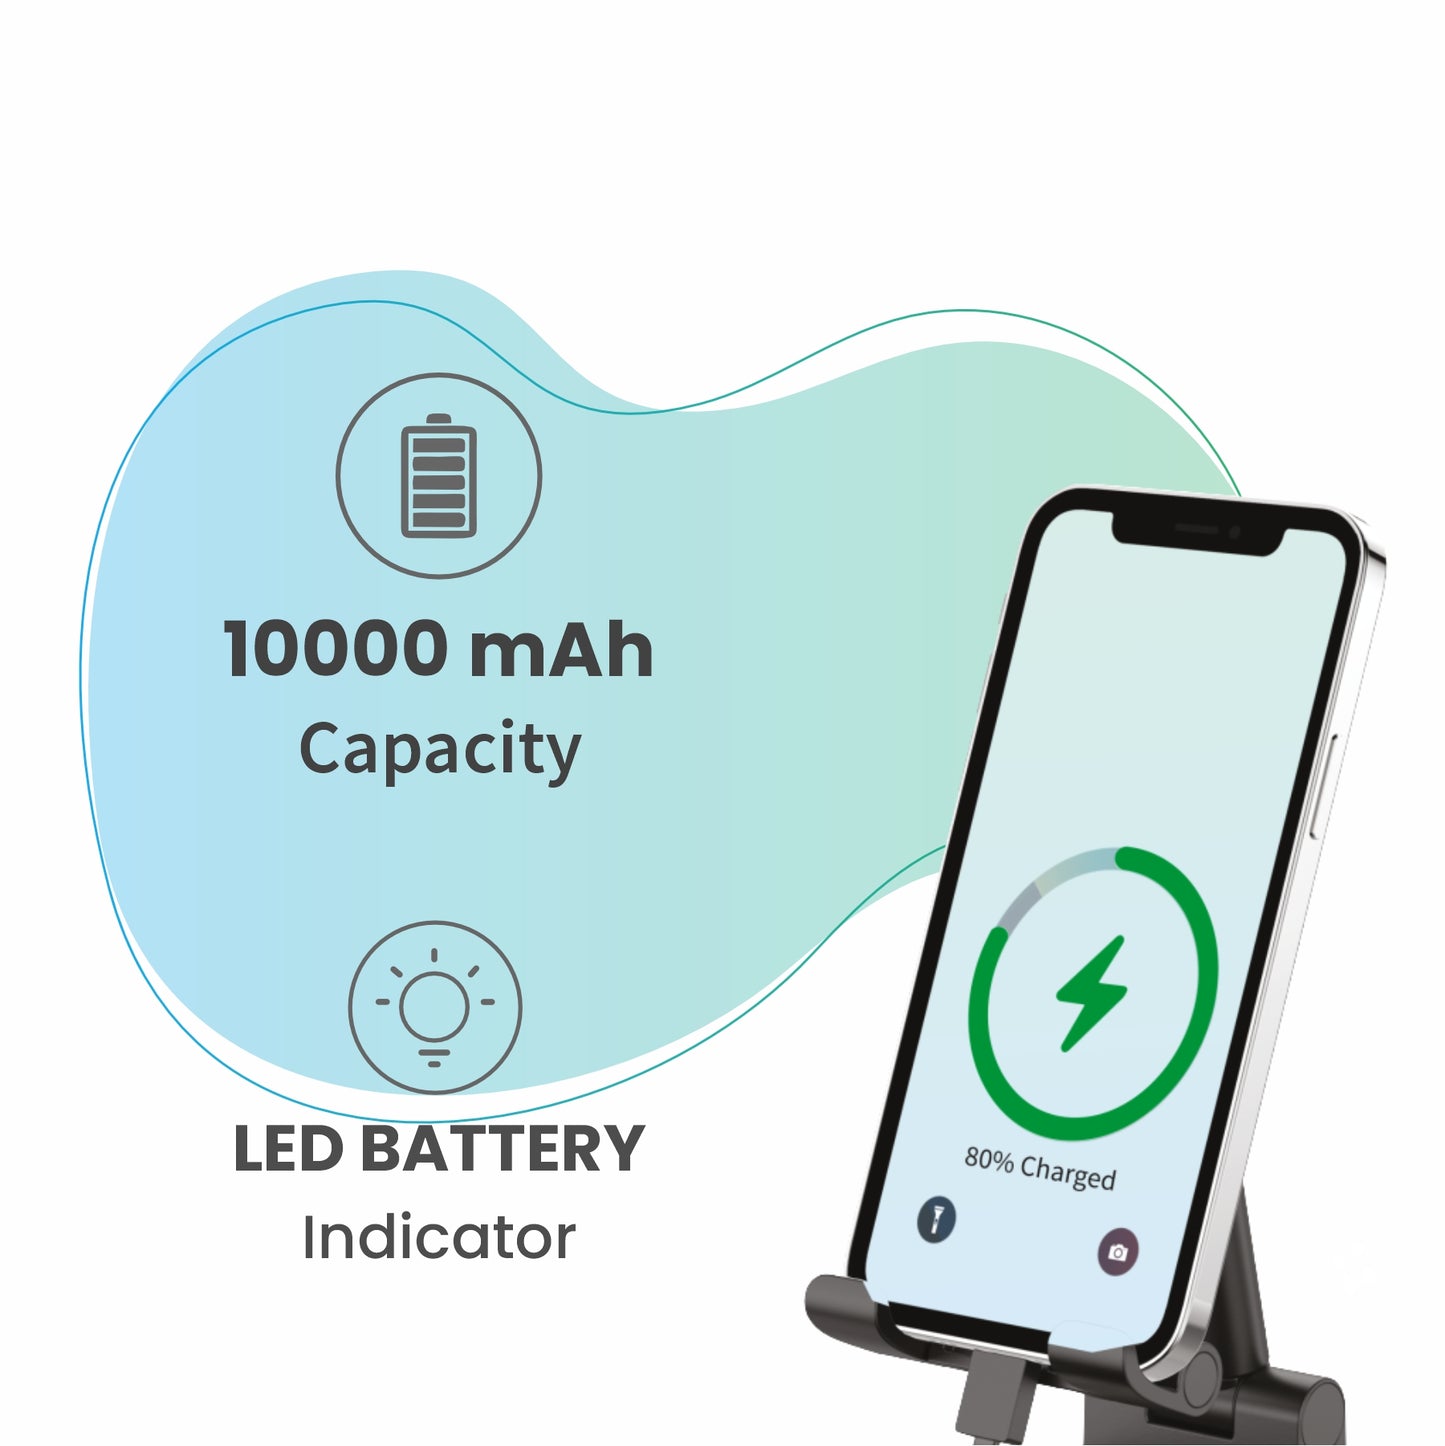 LYNE Powerbox 4 10K mAh Battery Capacity, 46 Hours Extra Backup, Single USB Port, LED Battery Indicator